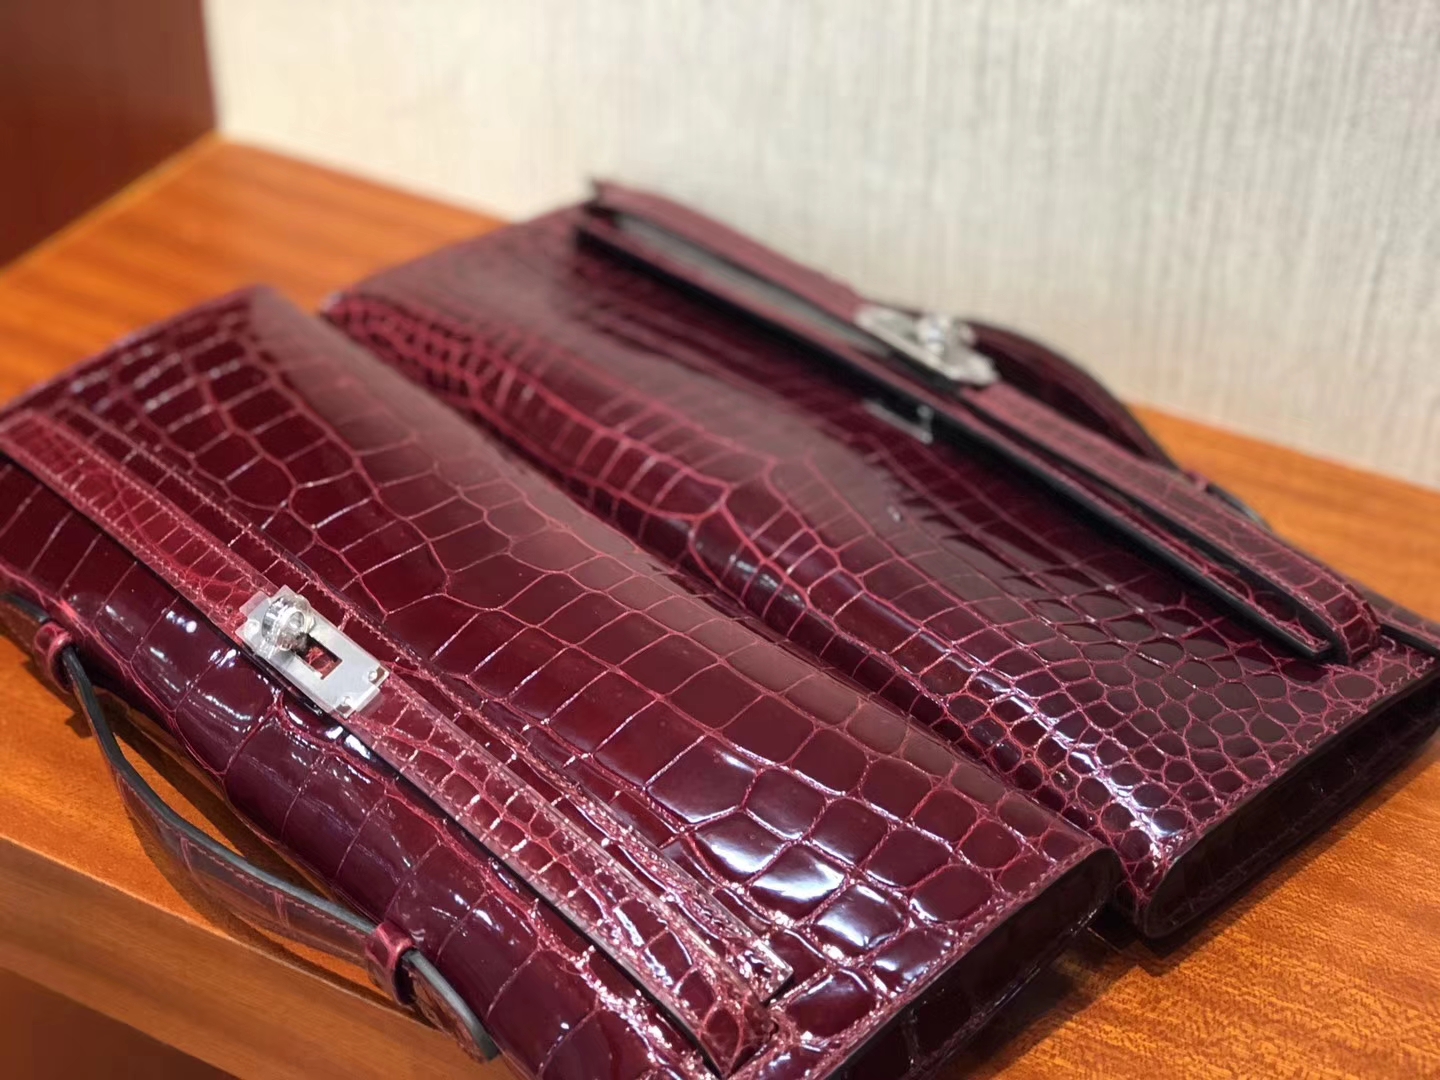 Luxury Hermes CK57 Bordeaux Red Shiny Crocodile Leather Kelly Cut Clutch Bag